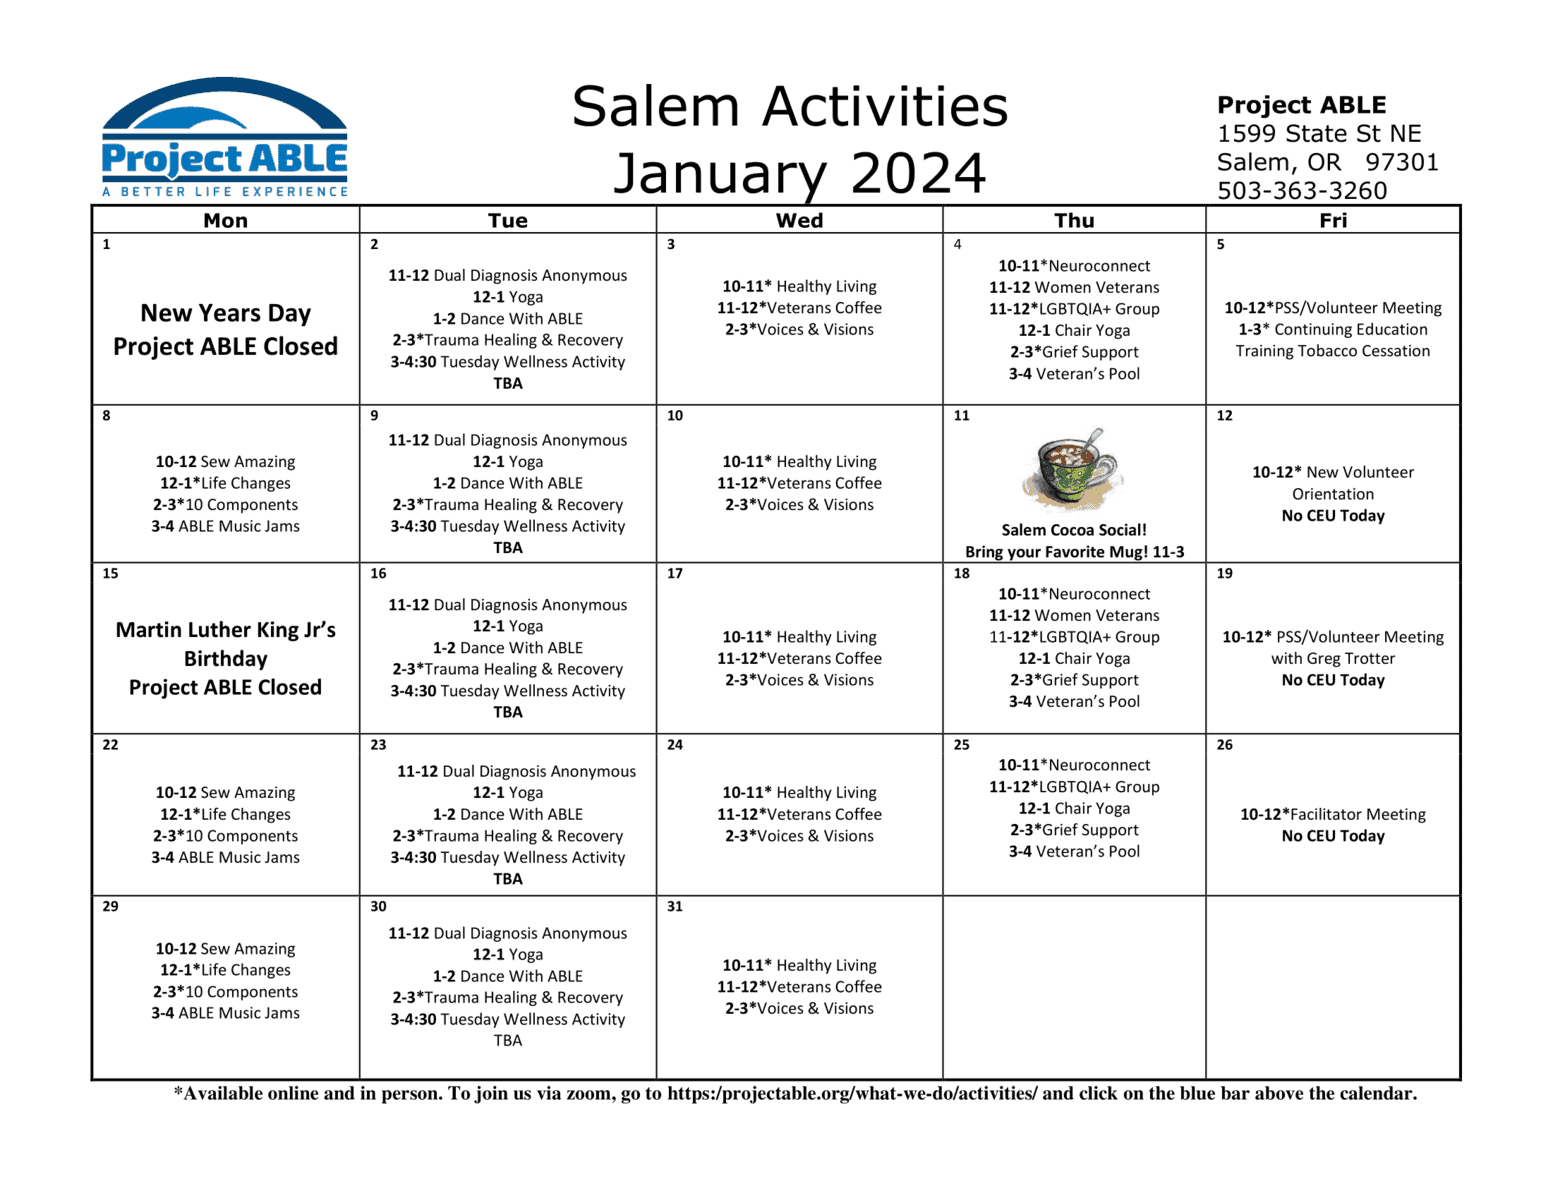 Salem Activities Calendar Project ABLE